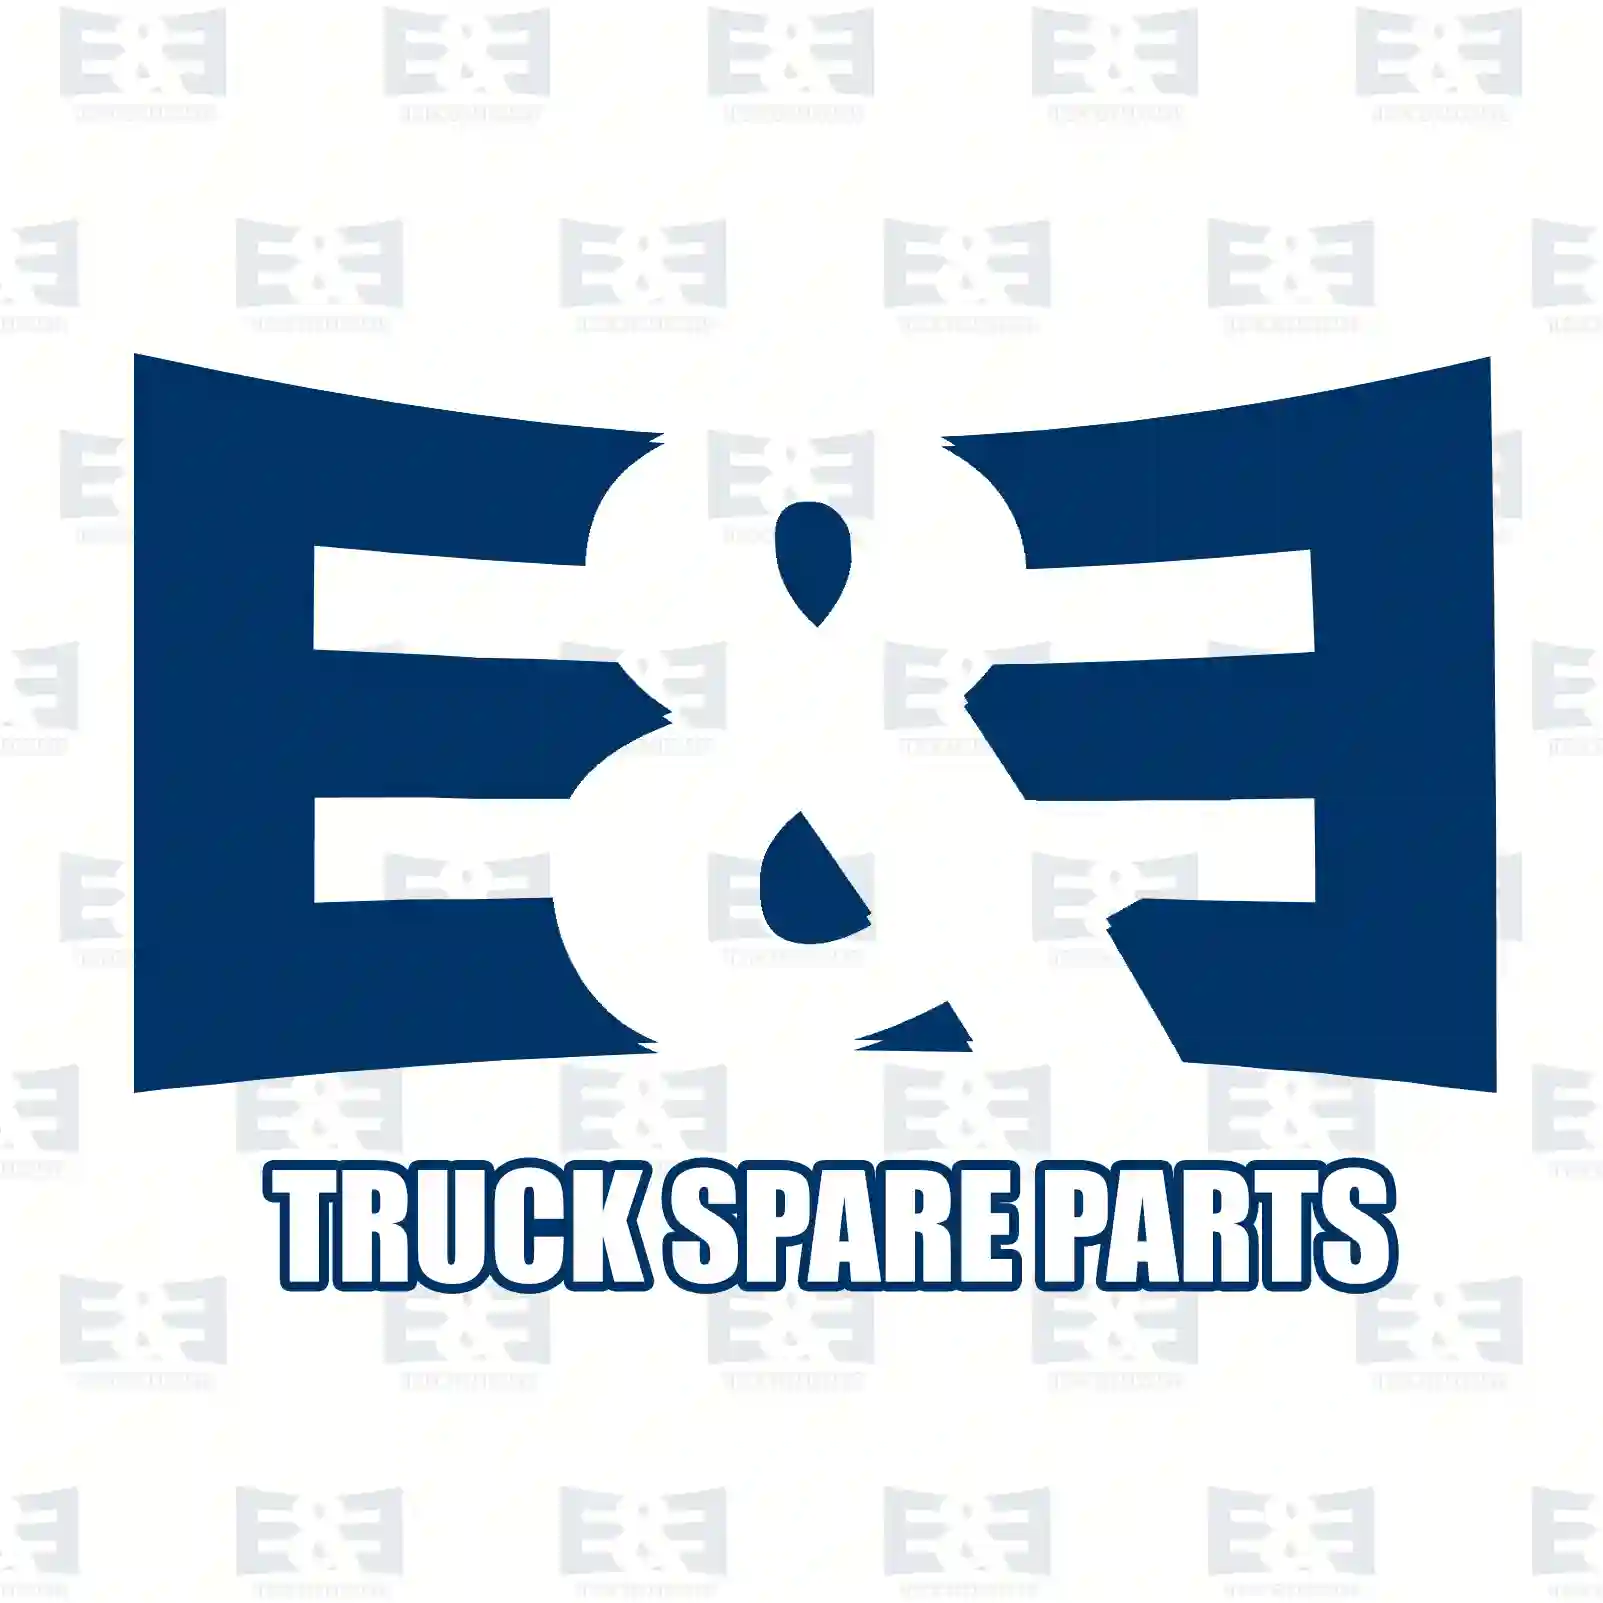 Shock absorber, rear, 2E2283367, 2C11-18080-AA, 4333505, 4494274, YC15-18080-SA, ||  2E2283367 E&E Truck Spare Parts | Truck Spare Parts, Auotomotive Spare Parts Shock absorber, rear, 2E2283367, 2C11-18080-AA, 4333505, 4494274, YC15-18080-SA, ||  2E2283367 E&E Truck Spare Parts | Truck Spare Parts, Auotomotive Spare Parts